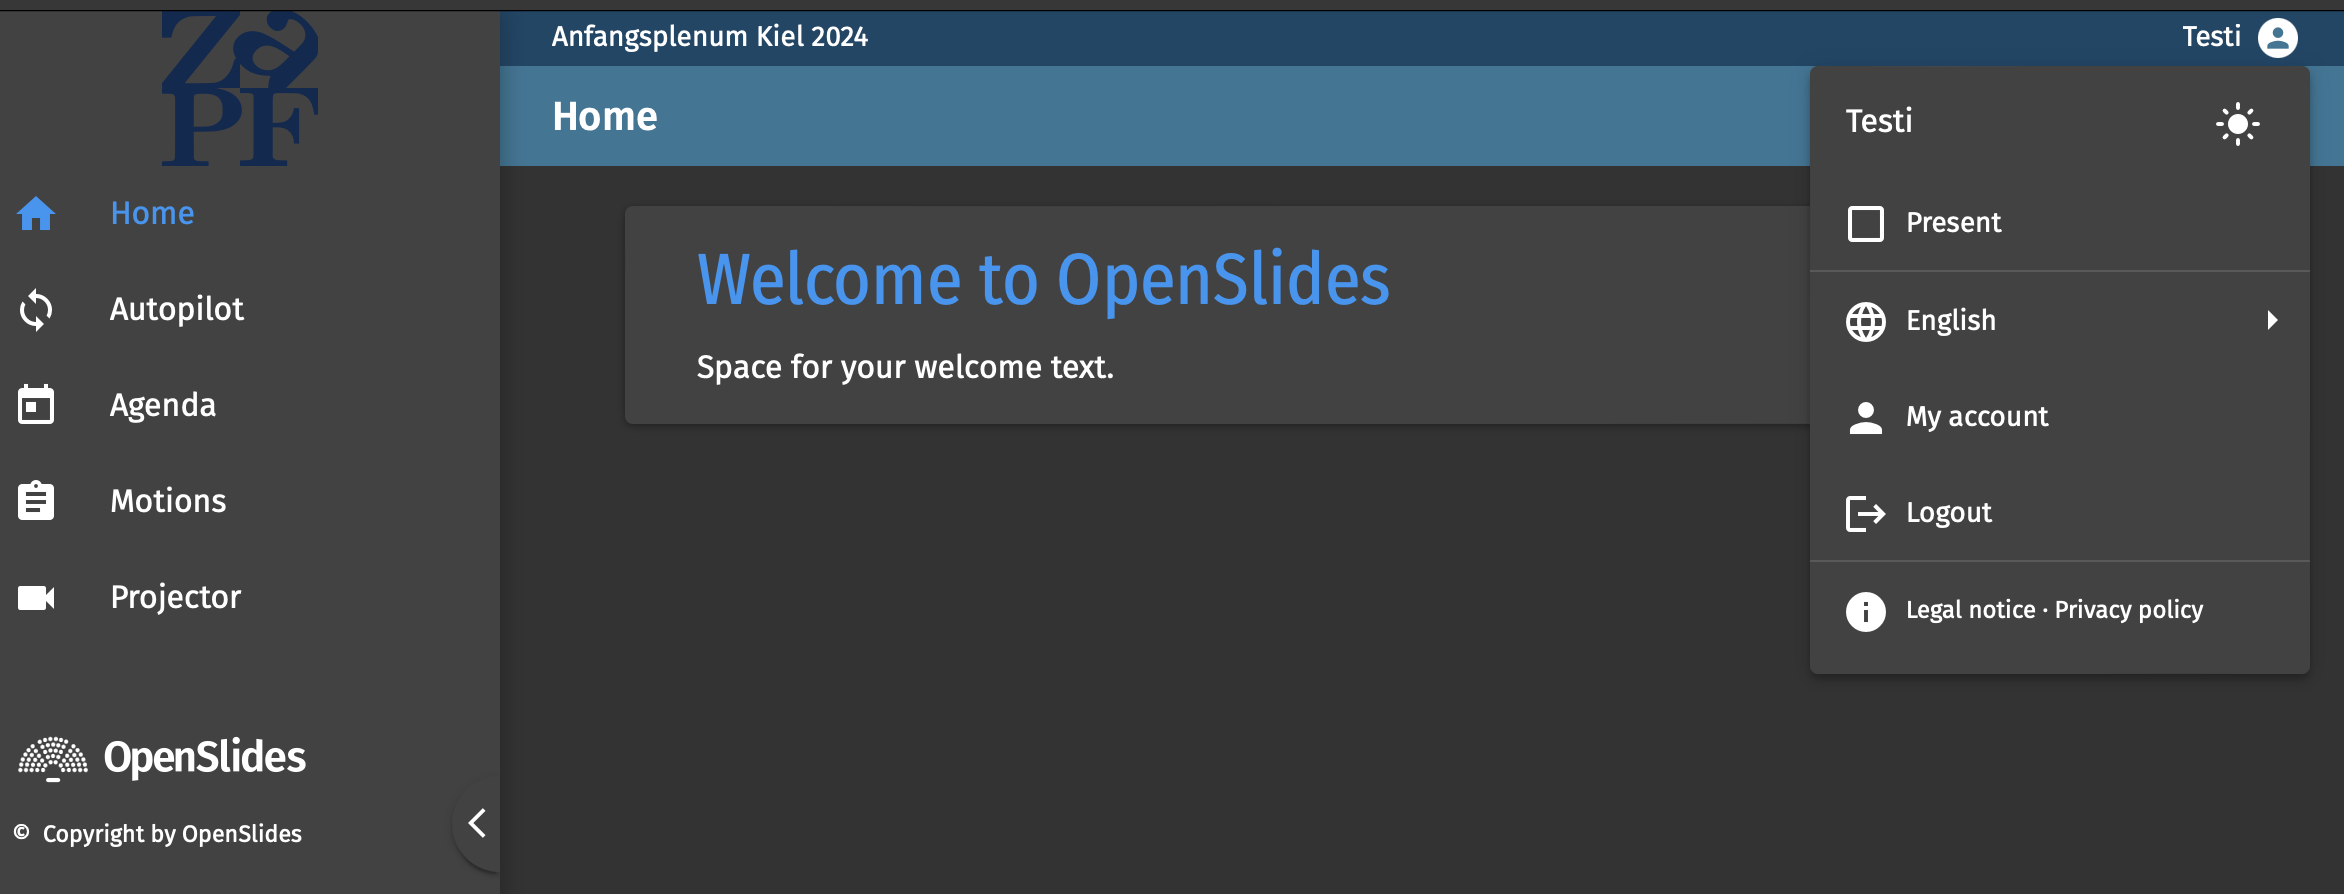 Openslides3.png